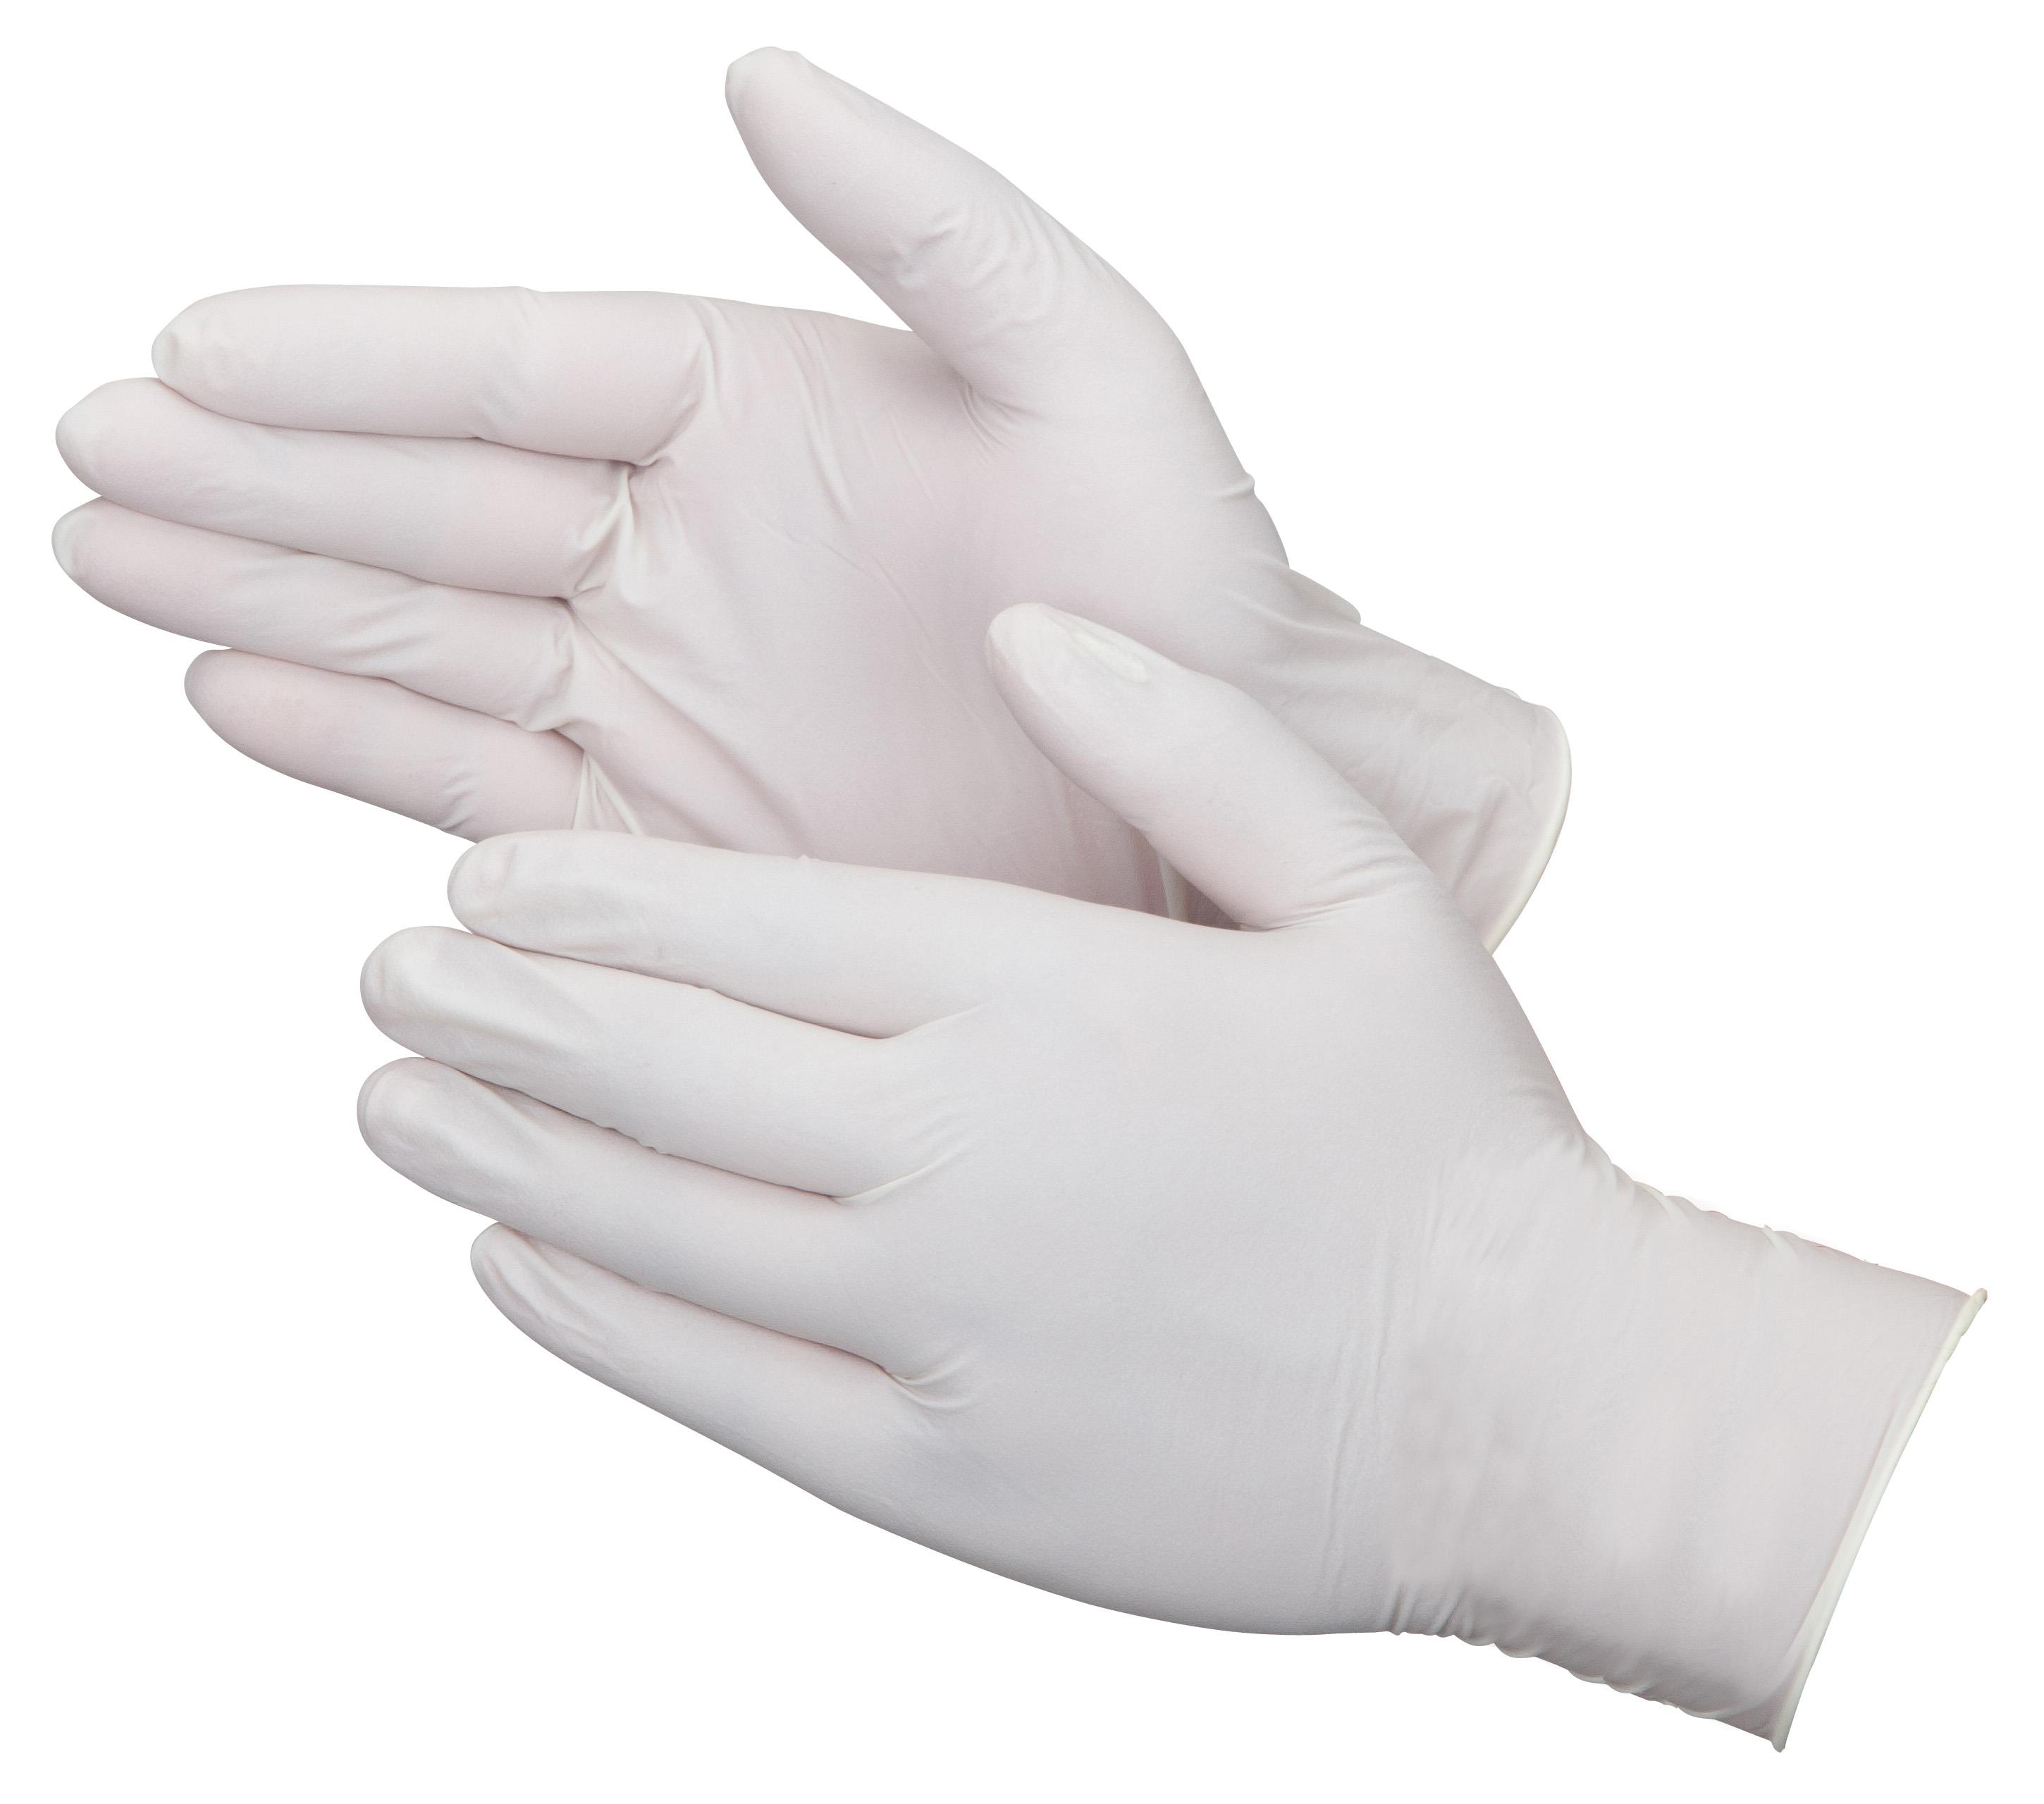 DURASKIN 5 MIL POWDERED LATEX 100/BX - Tagged Gloves